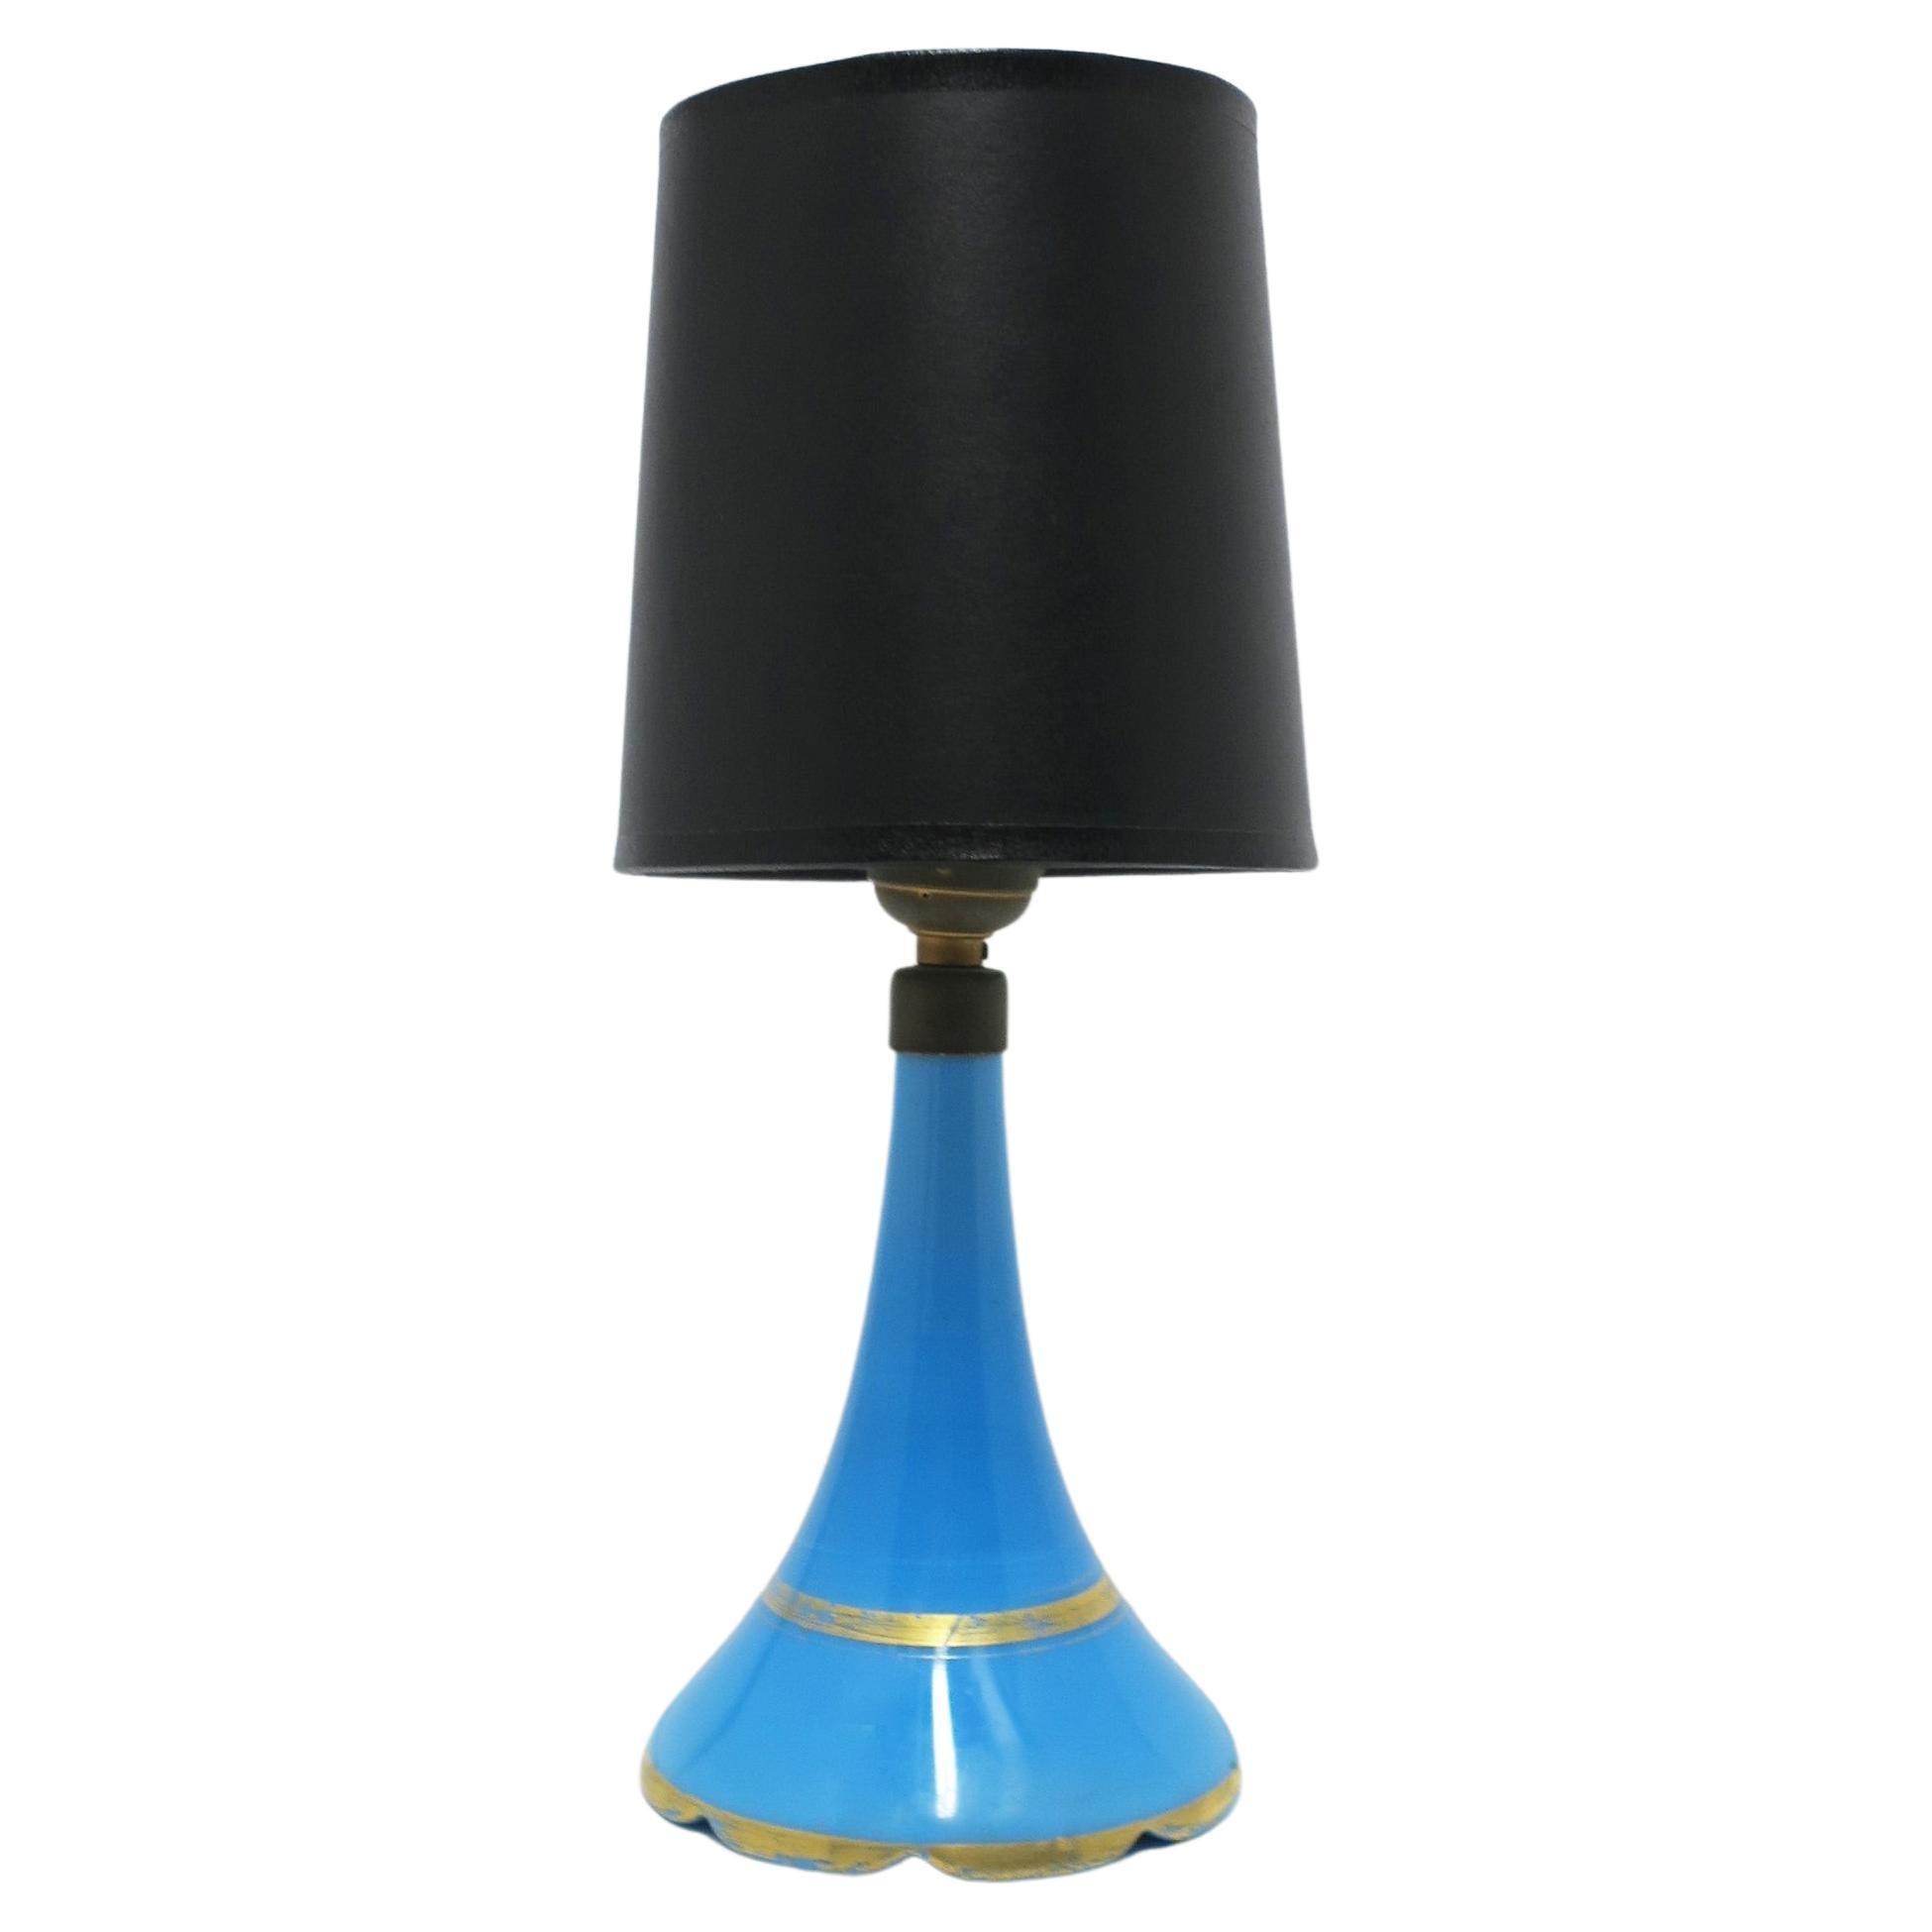 Lampe de bureau italienne en verre opalin bleu avec bord festonné